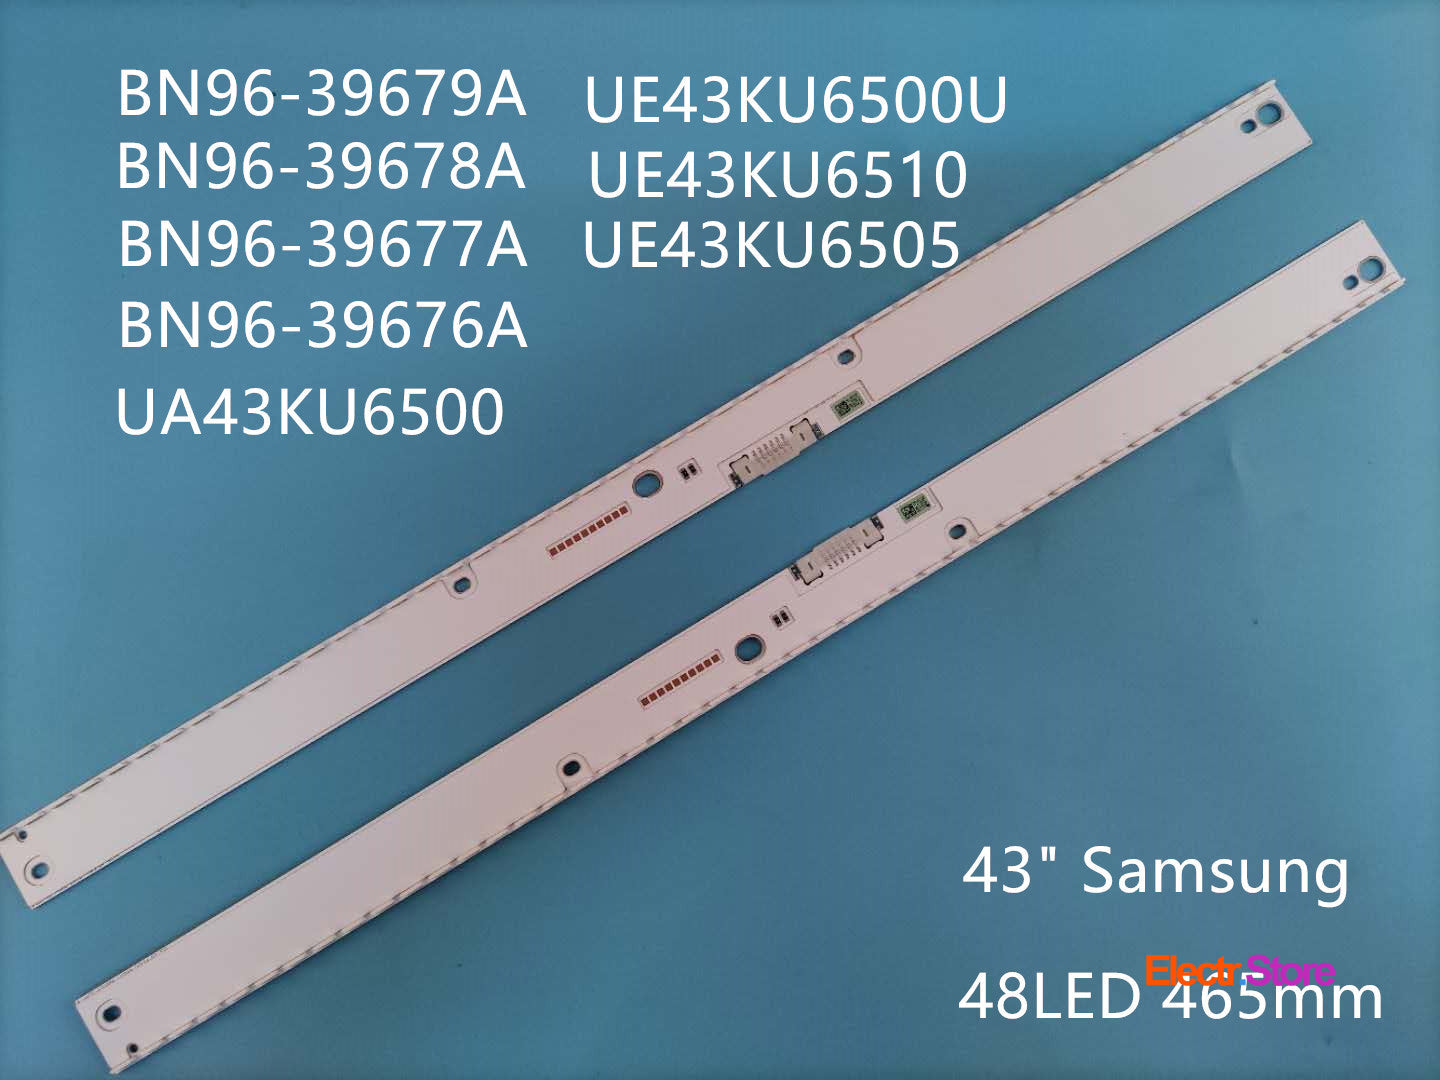 LED Backlight Strip Kits, BN96-39676A/39677A, V6ER_430SMA_LED48_R2/V6ER_430SMB_LED48_R2, 2X48LED (2 pcs/kit), for TV 43" SAMSUNG: UE43KU6500U, UE43KU6510, UE43KU6505, UA43KU6500 43" BN96-39676A BN96-39677A BN96-39678A BN96-39679A LED Backlights Samsung V6ER_430SMA_LED48_R2 V6ER_430SMB_LED48_R2 Electr.Store